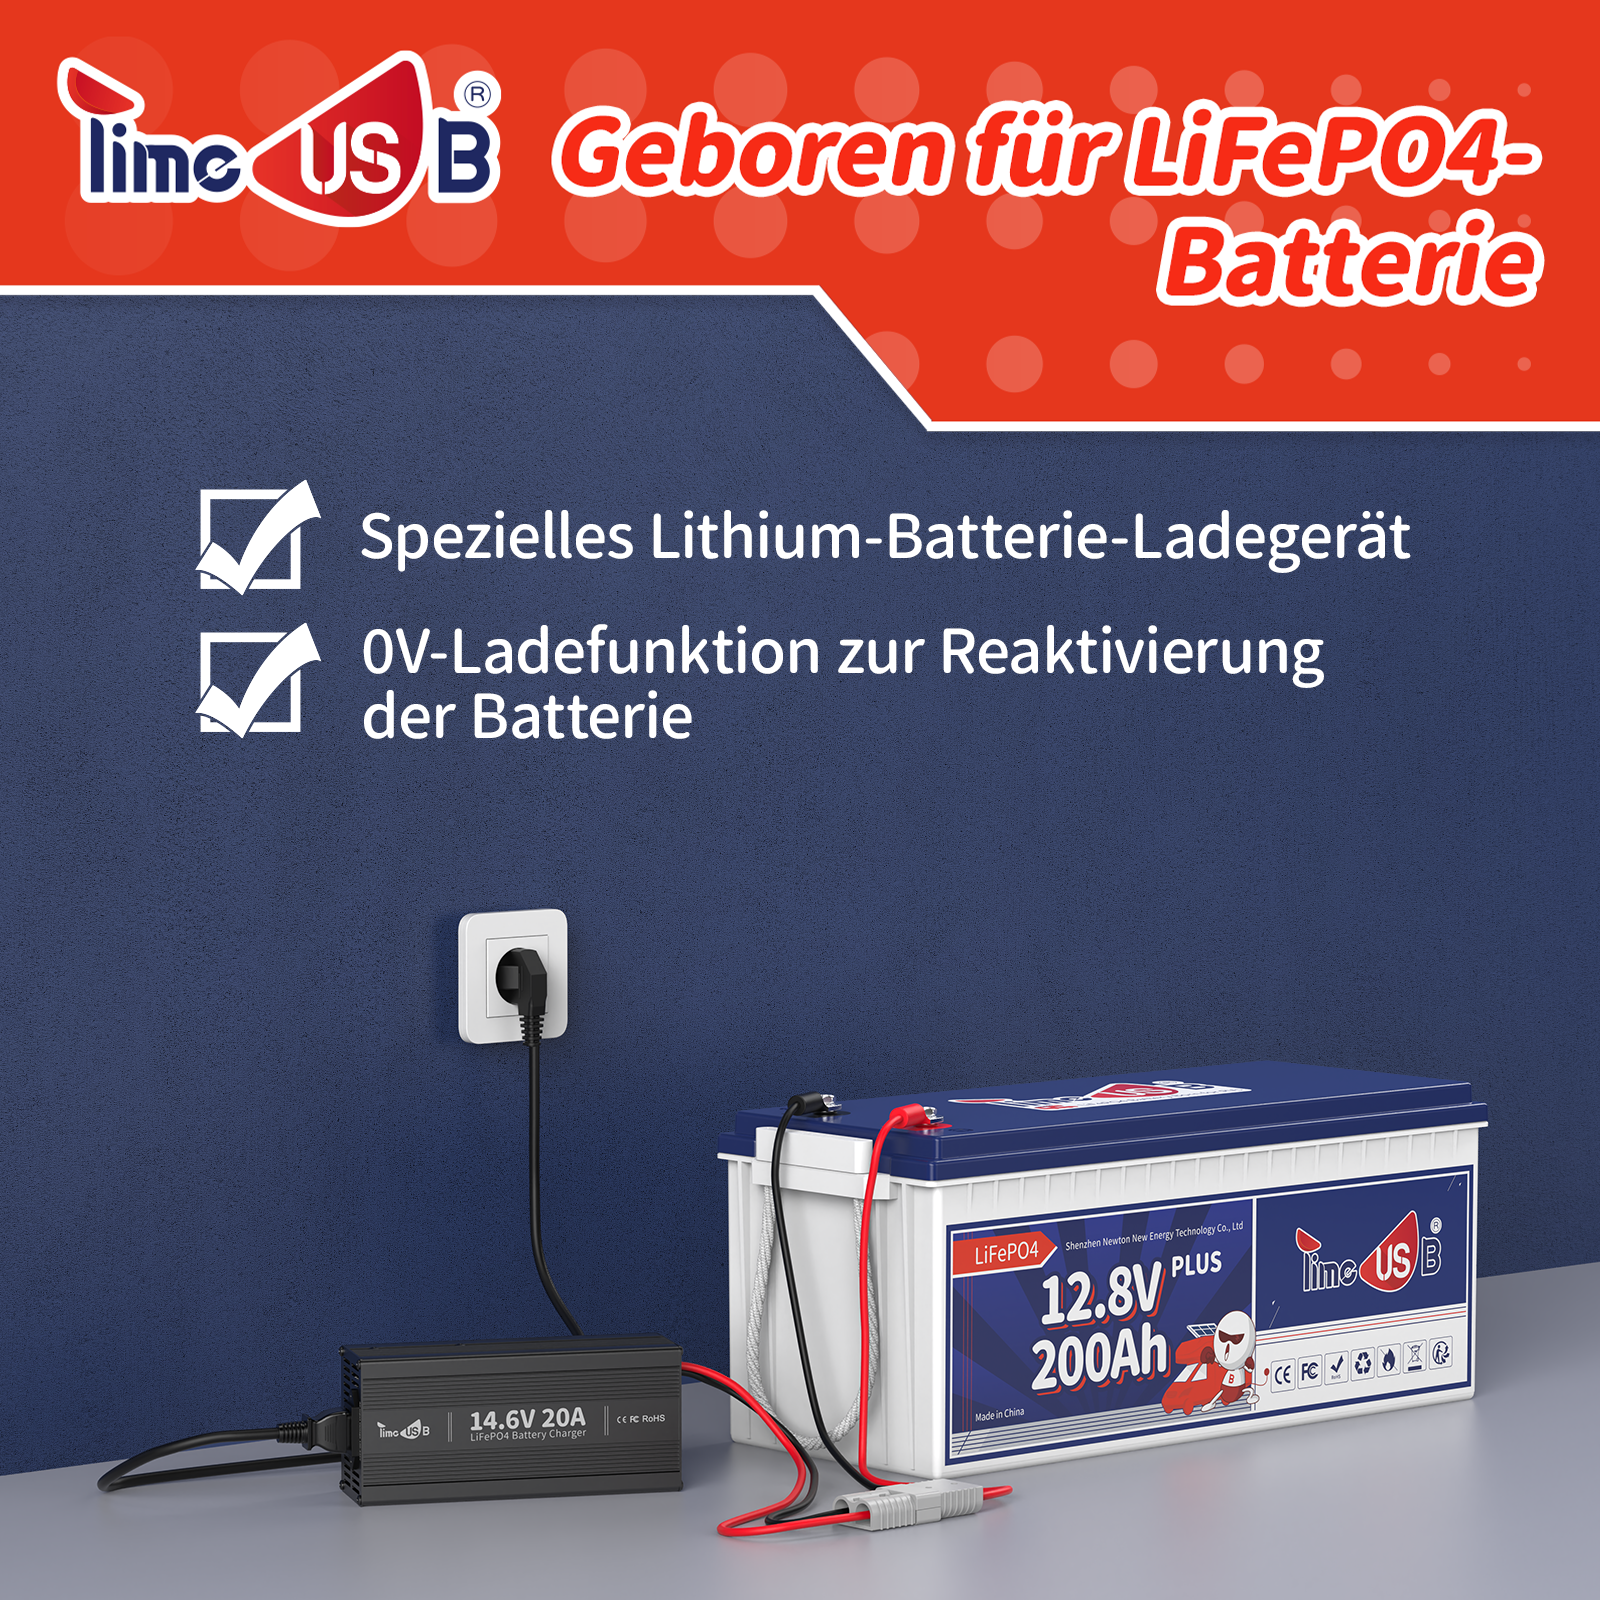 Timeusb LiFePO4 ladegerät 14,6V 20A Batterieladegerät 12V für LiFePO4 Batterie